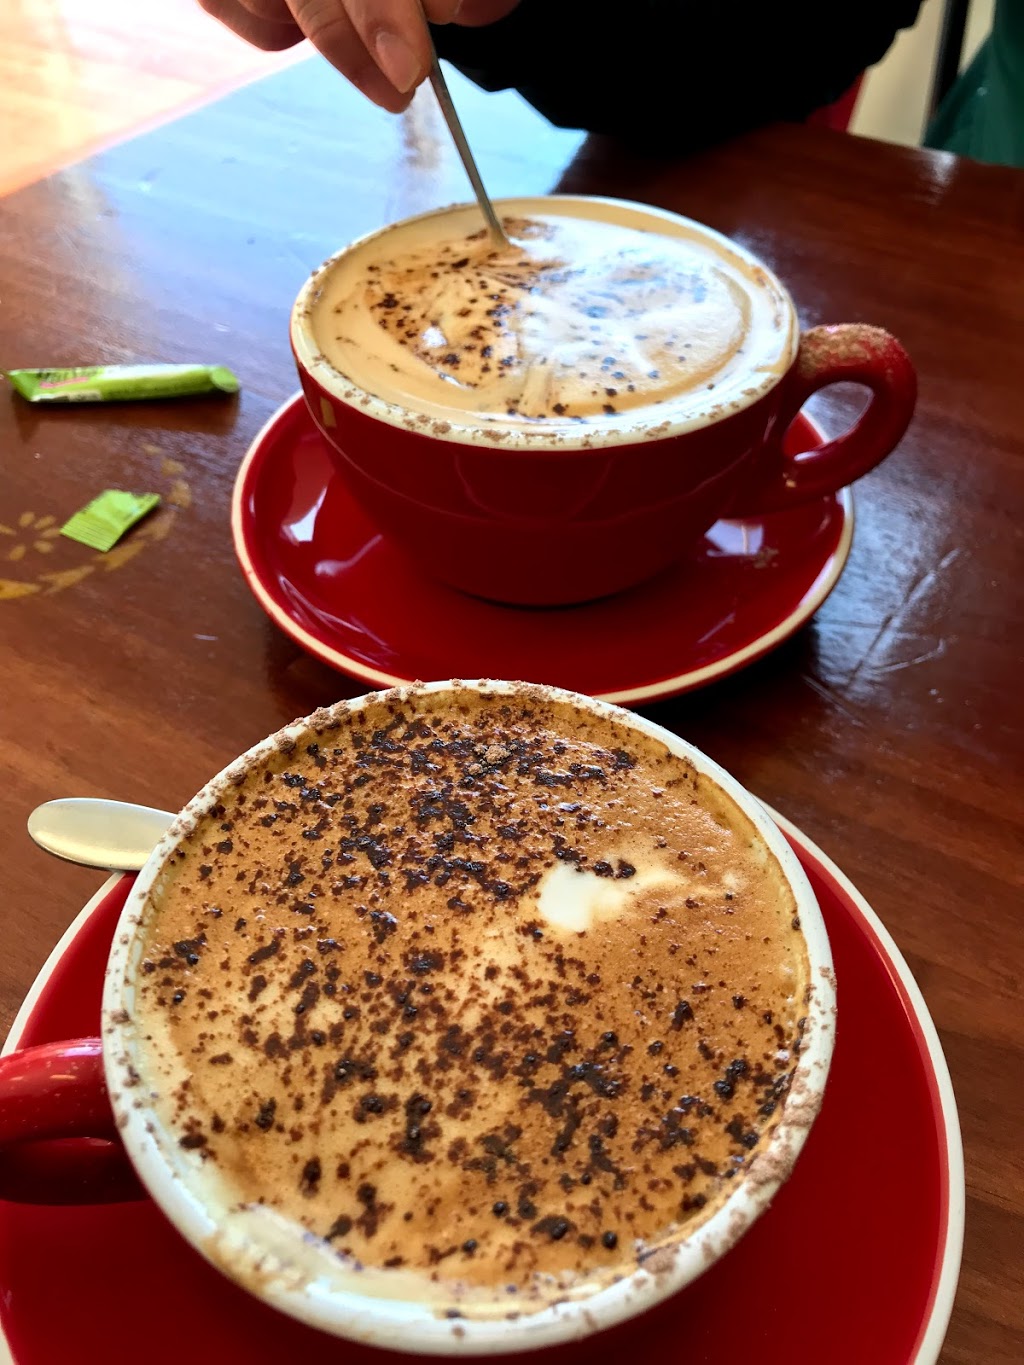 Fernz Cafe | 144 Queen St, St Marys NSW 2760, Australia | Phone: (02) 9833 8072